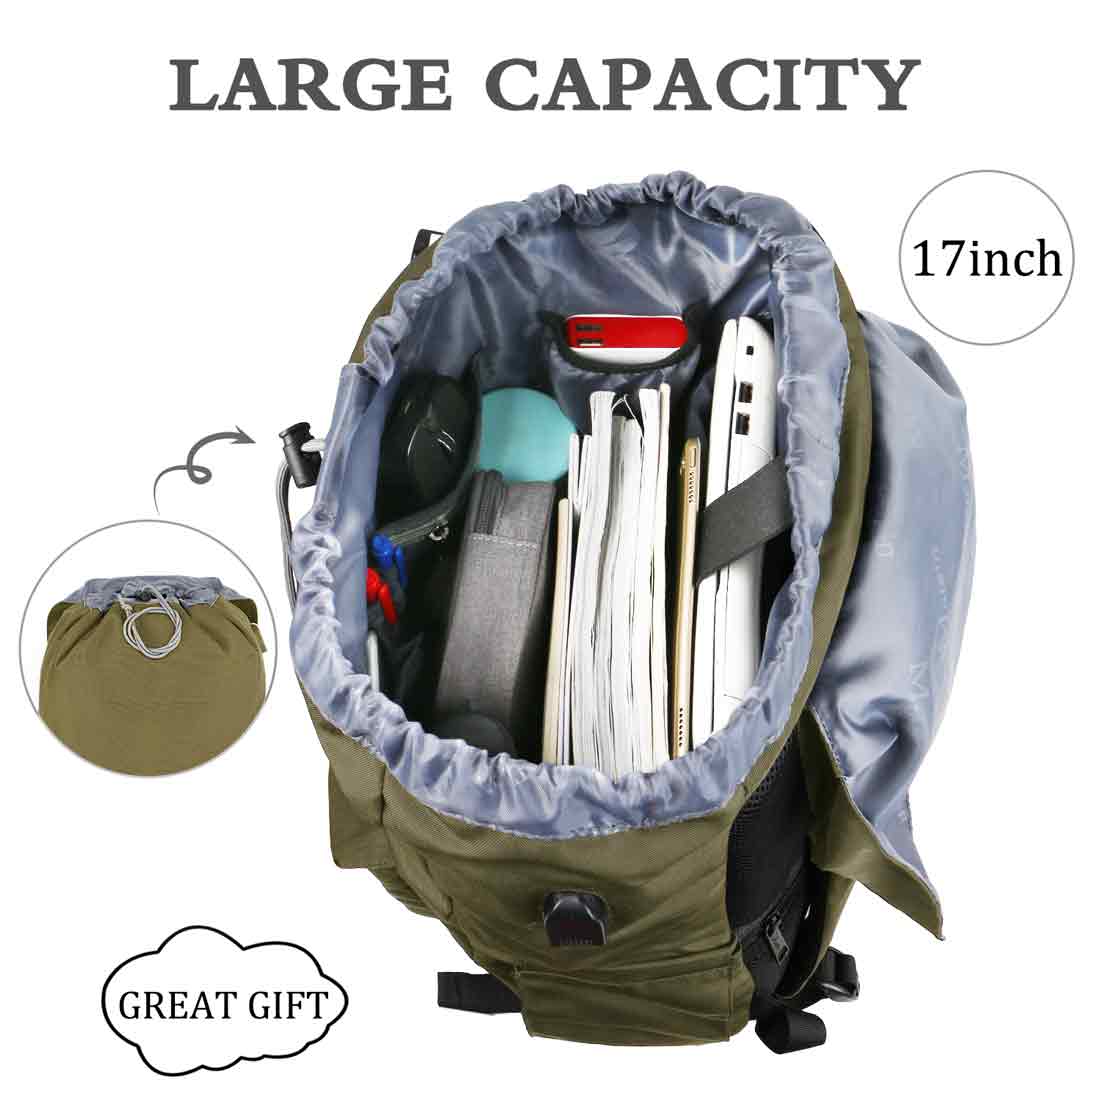 Matein Super Backpack